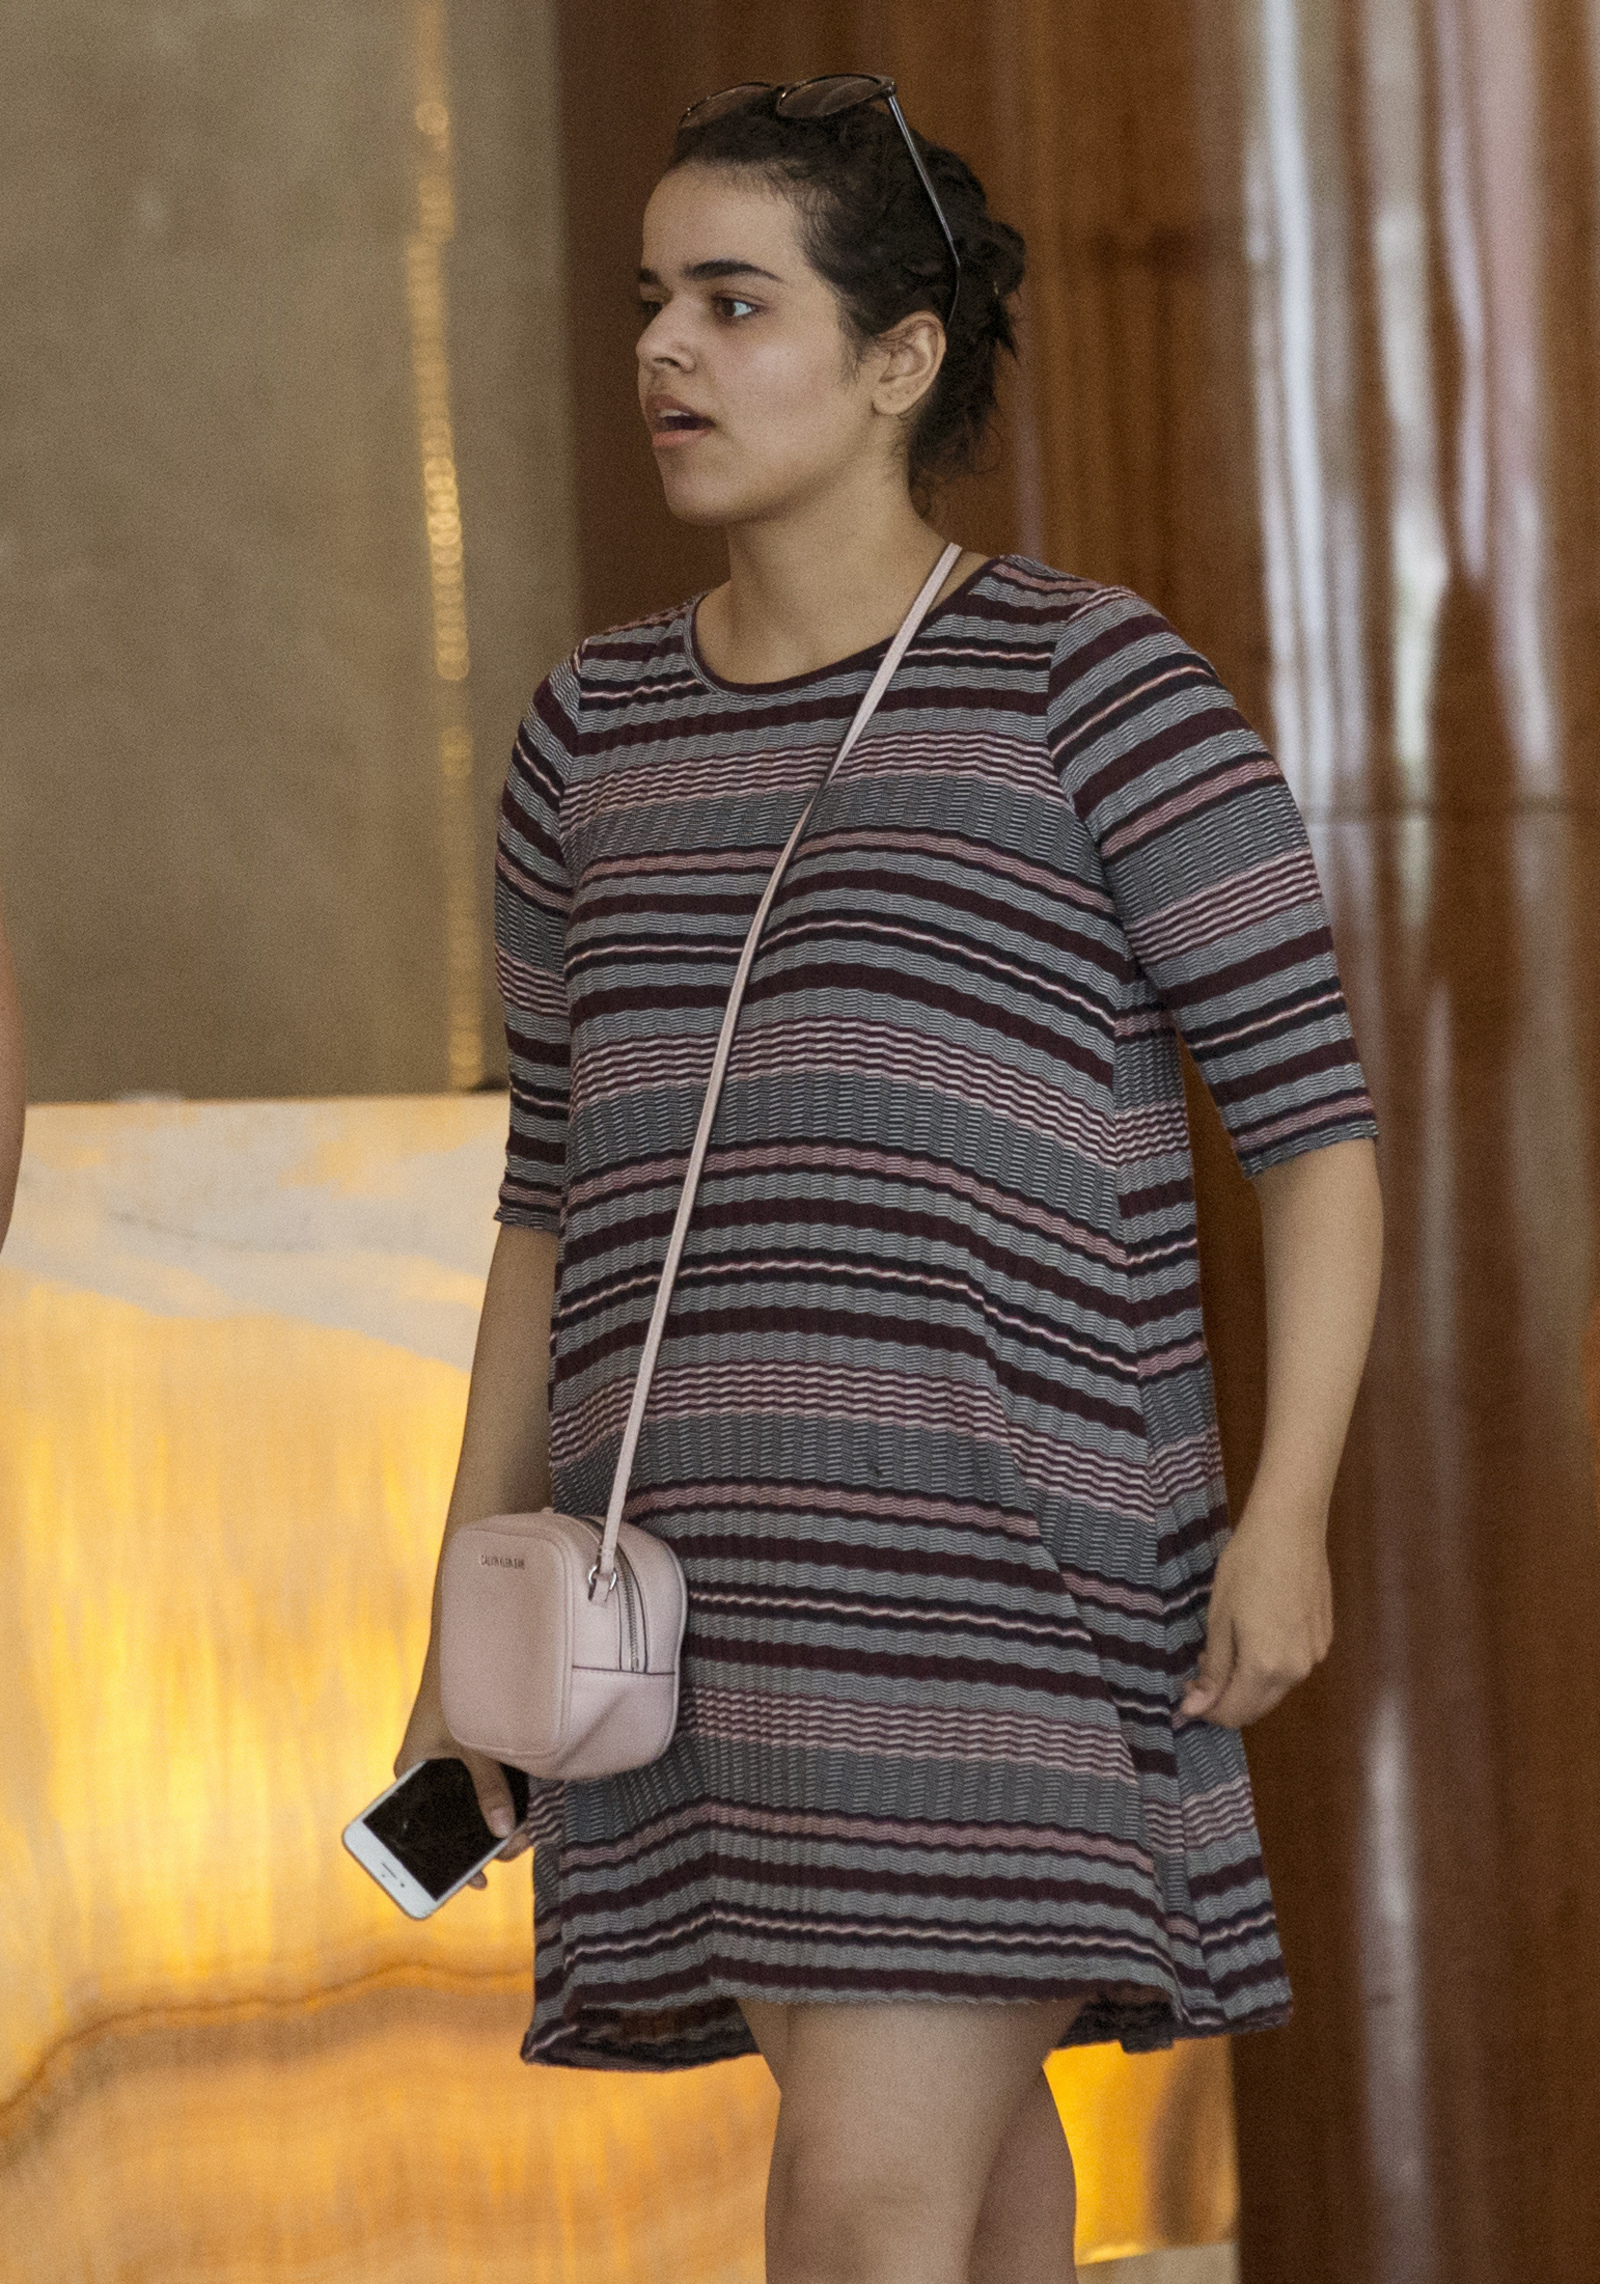 Travesía. La joven saudita Rahaf Mohammed al-Qunun decidió huir y llegó al Aeropuerto Internacional de Bangkok.